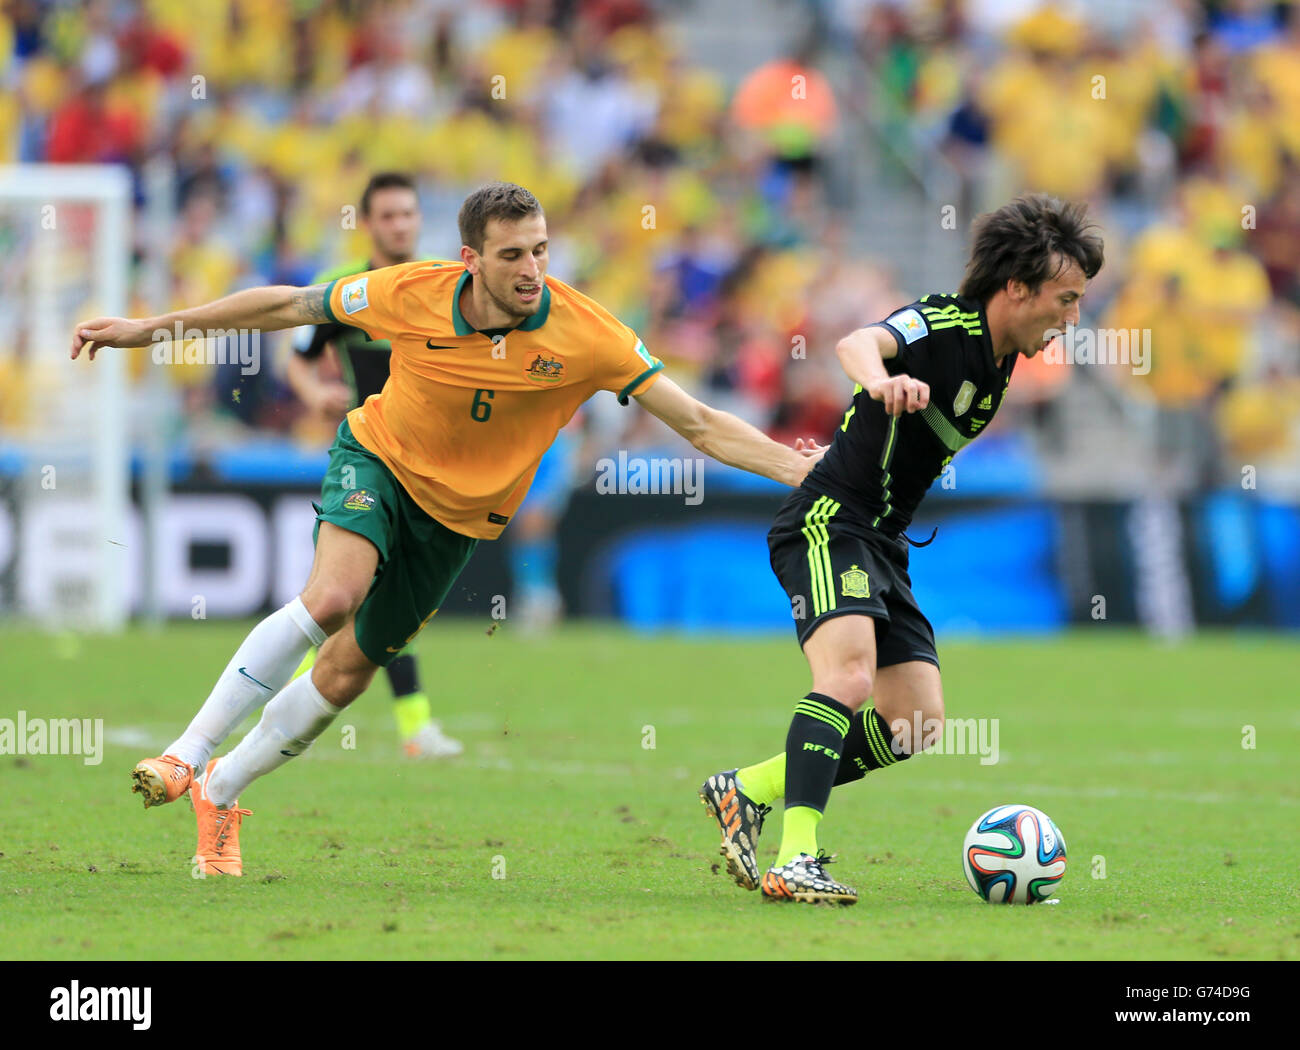 Soccer - FIFA World Cup 2014 - Group B - Australia v Spain - Arena da Baixada. Australia's Matthew Spiranovic battles for the ball with Spain's David Silva Stock Photo